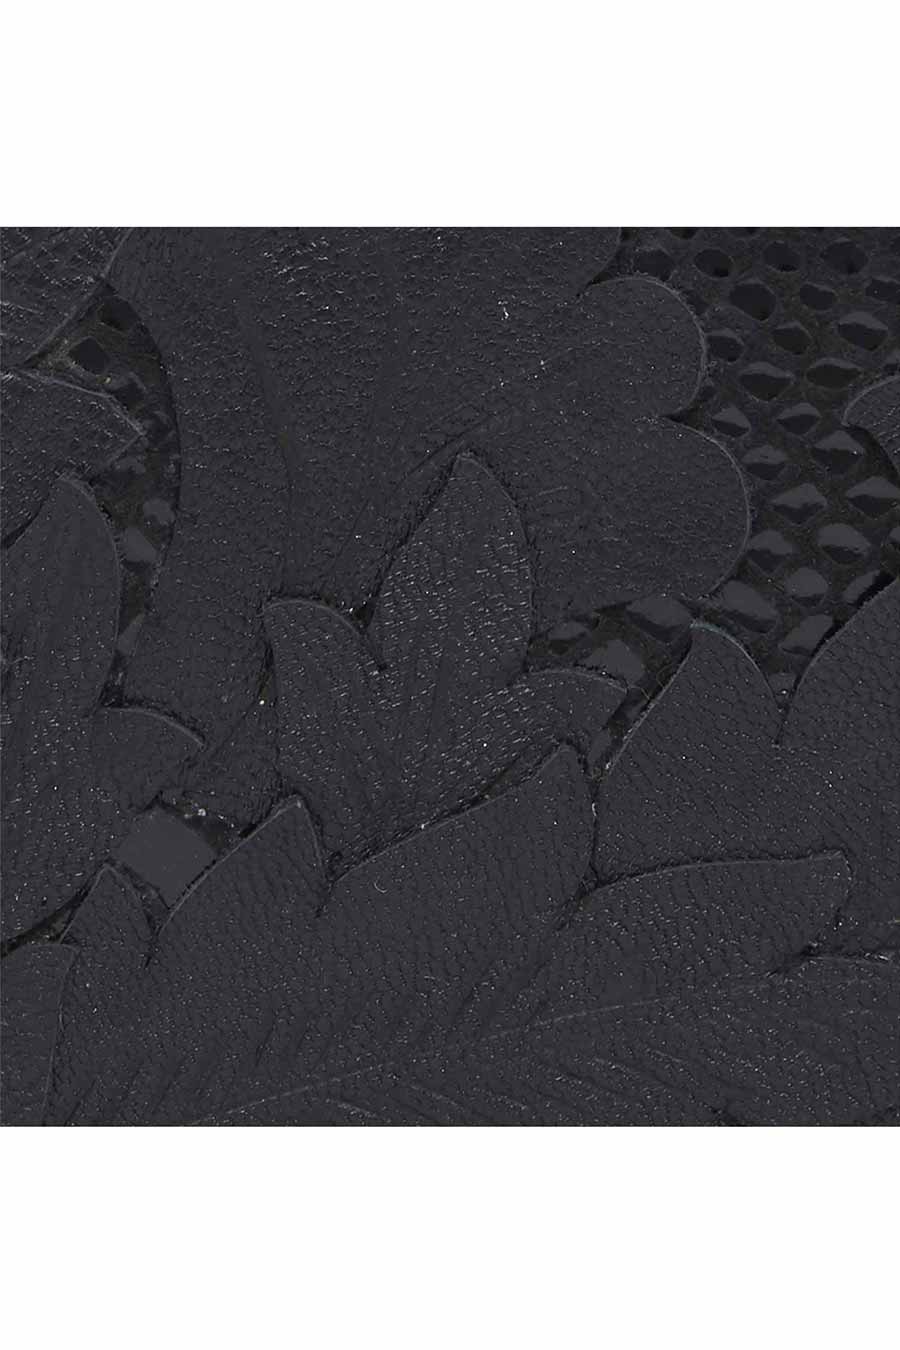 Black Snake Skin Cutwork Leather Clutch